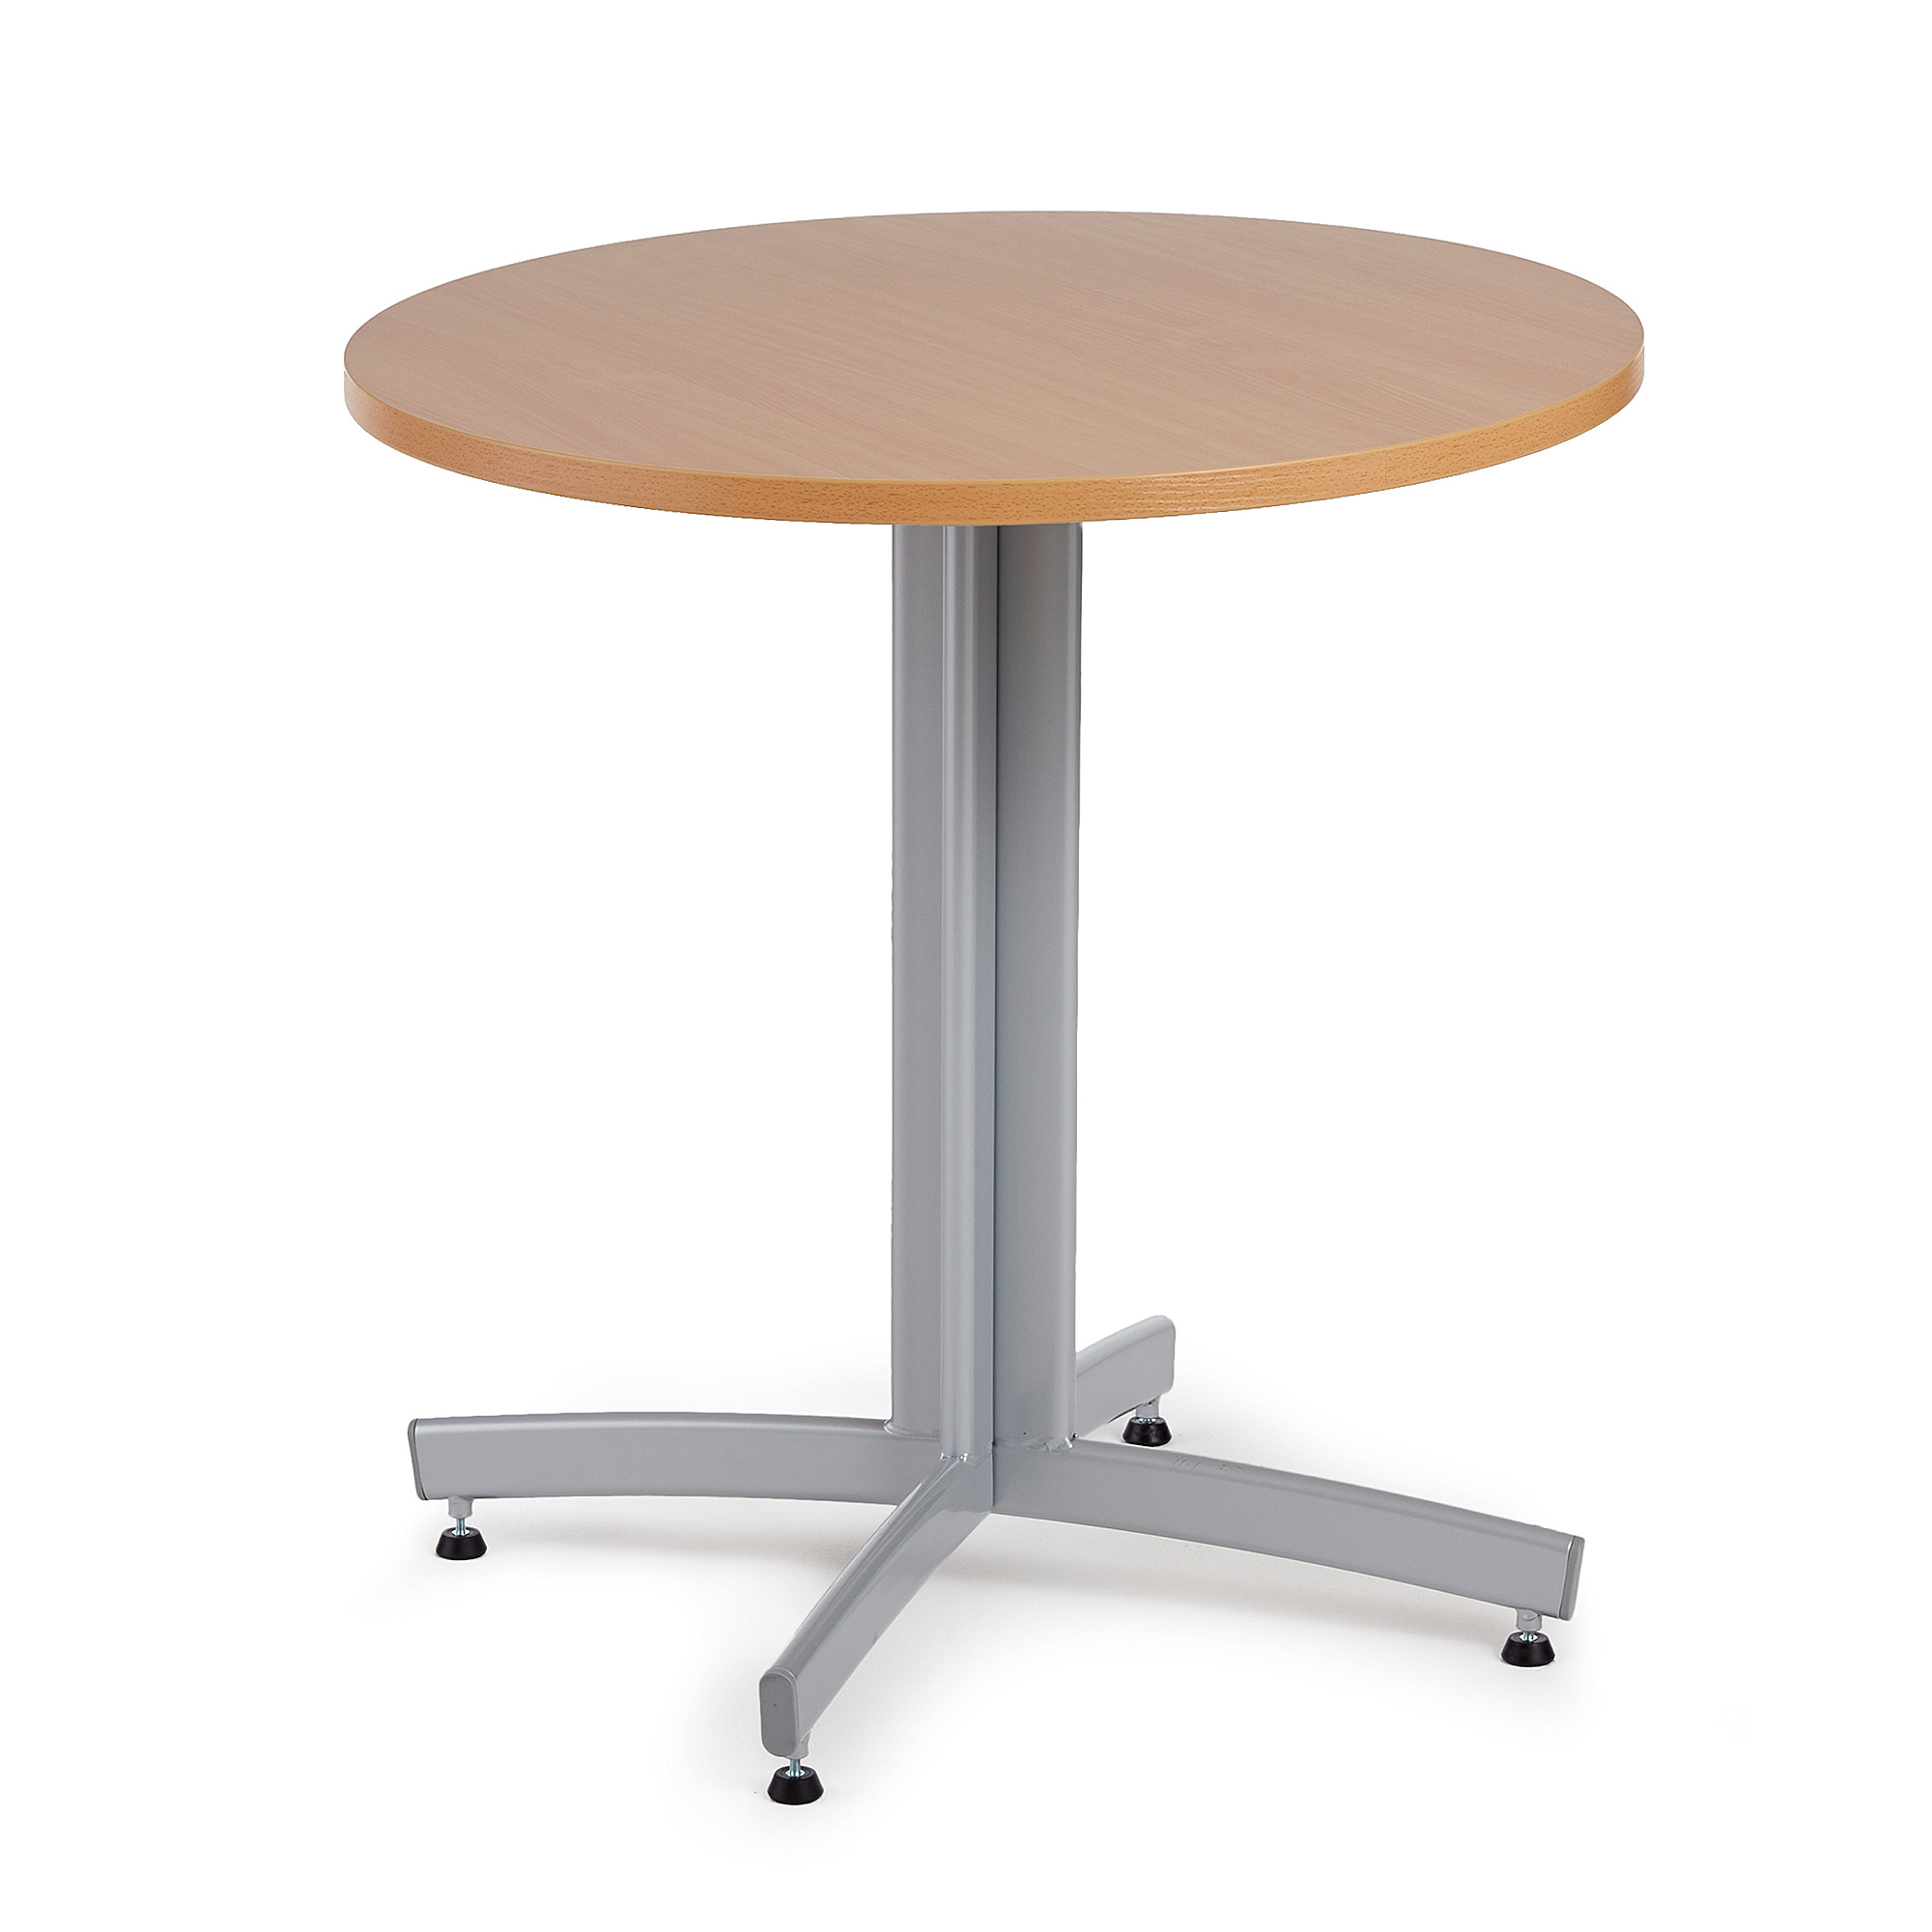 Jedálenský stôl SANNA, okrúhly Ø 700 x V 720 mm, buk / sivá